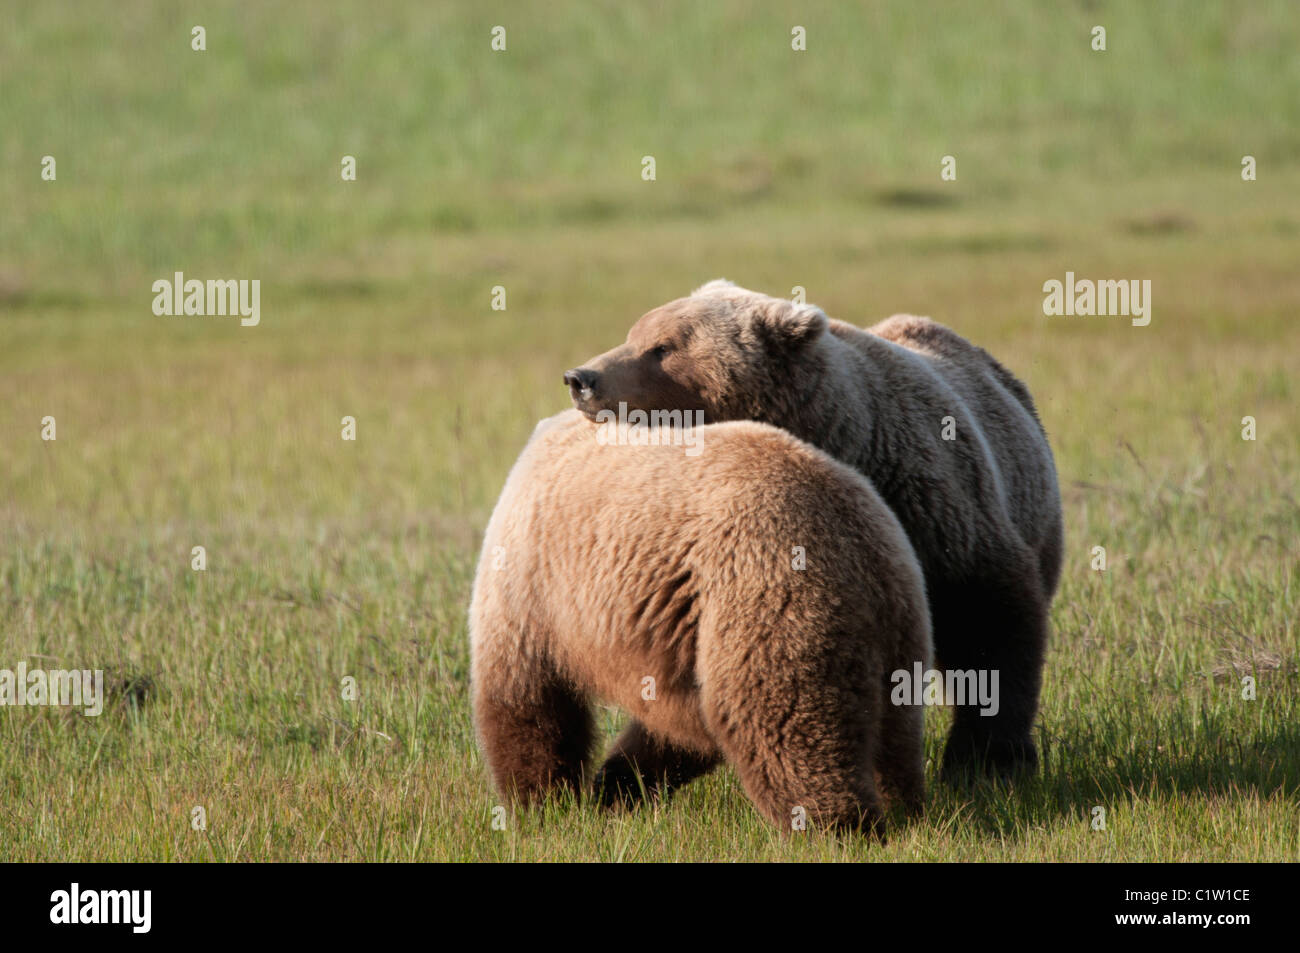 Kodiak brown bears (Ursus arctos middendorffi) in a field, Swikshak, Katami Coast, Alaska, USA Stock Photo